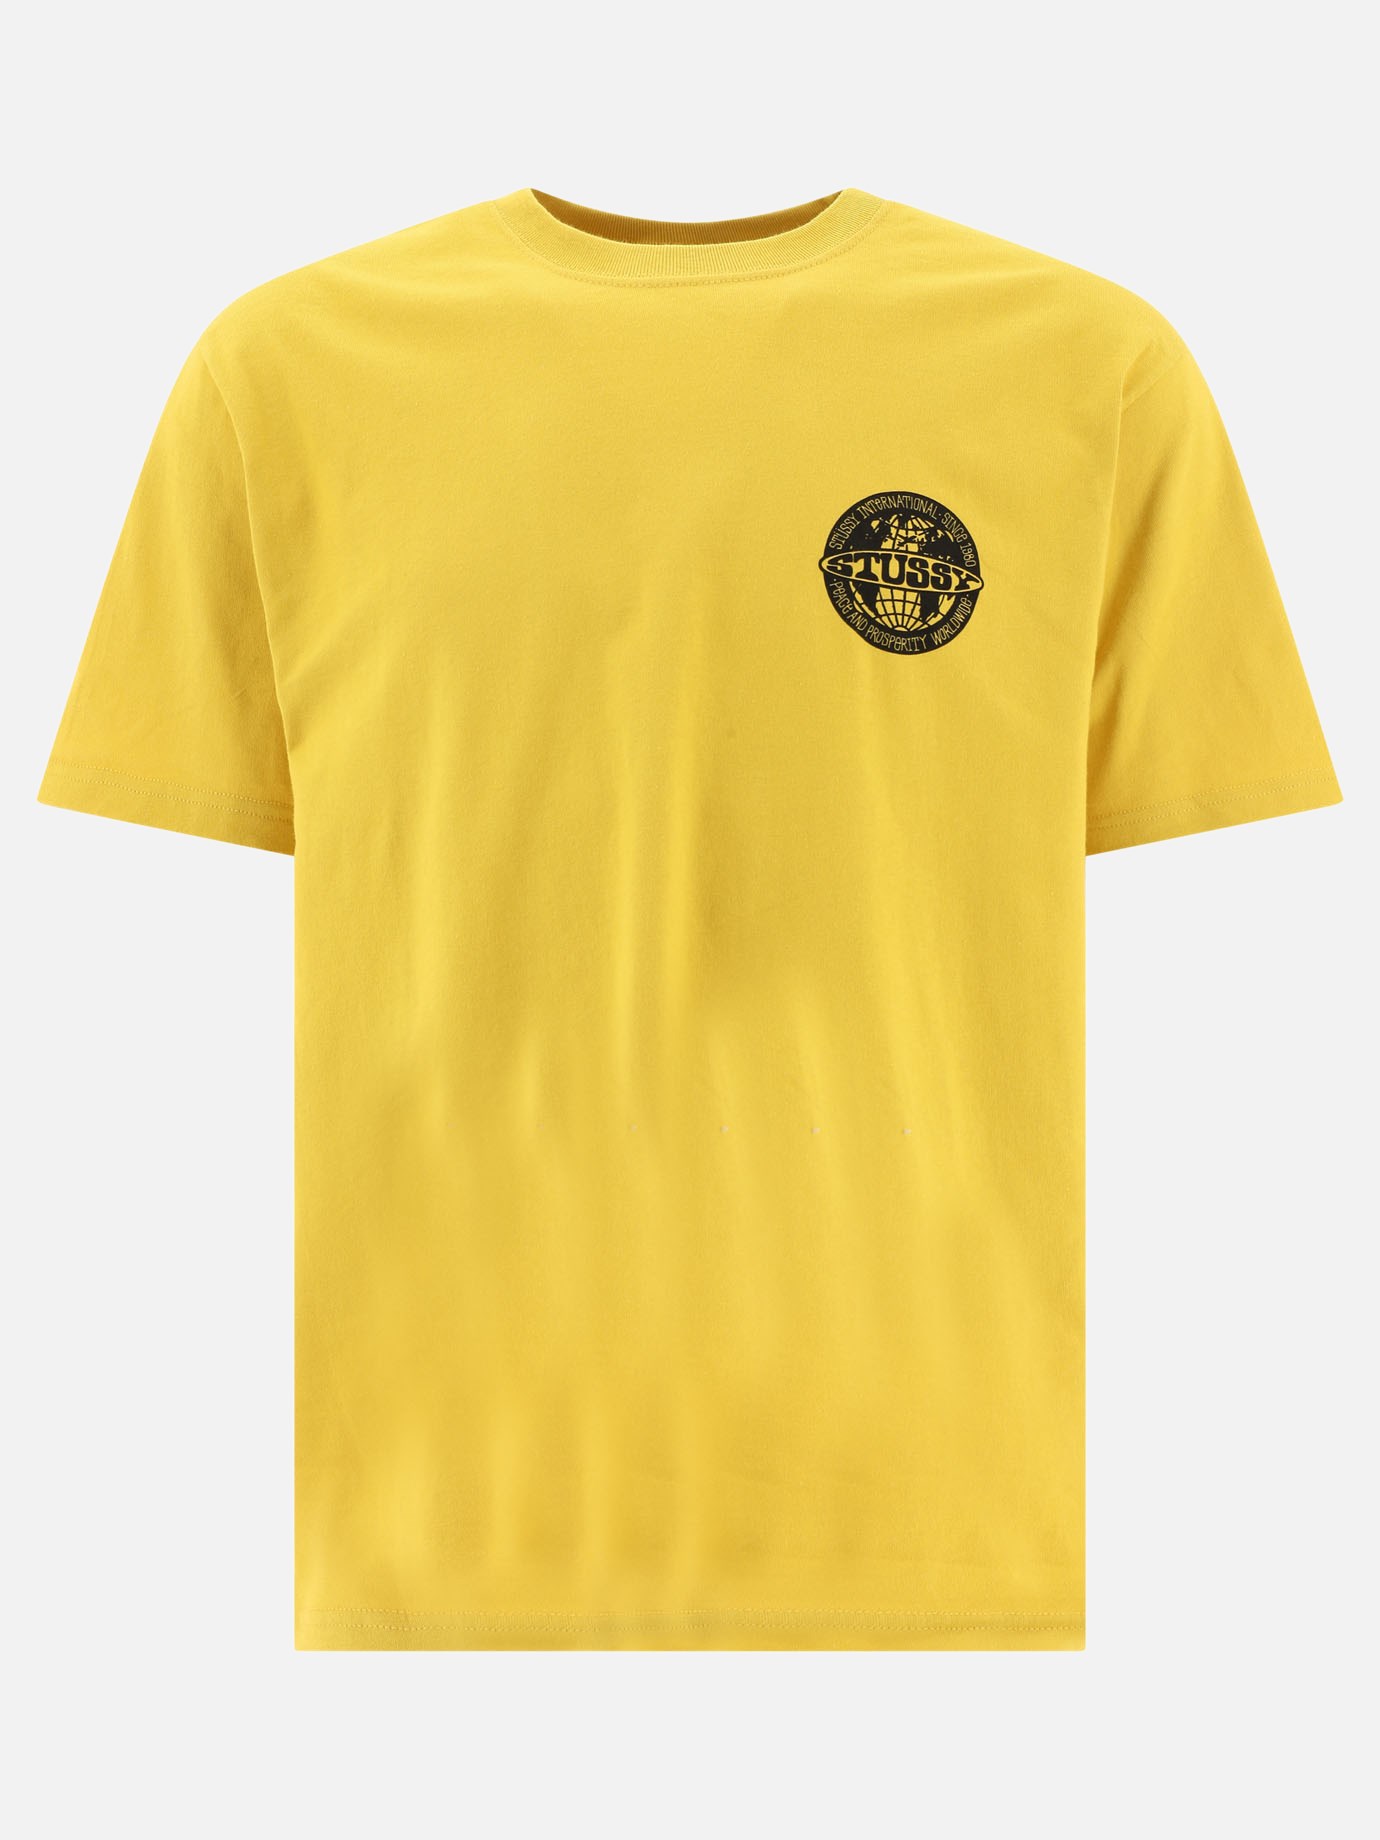 T-shirt  Worldwide Dot by Stüssy - 4